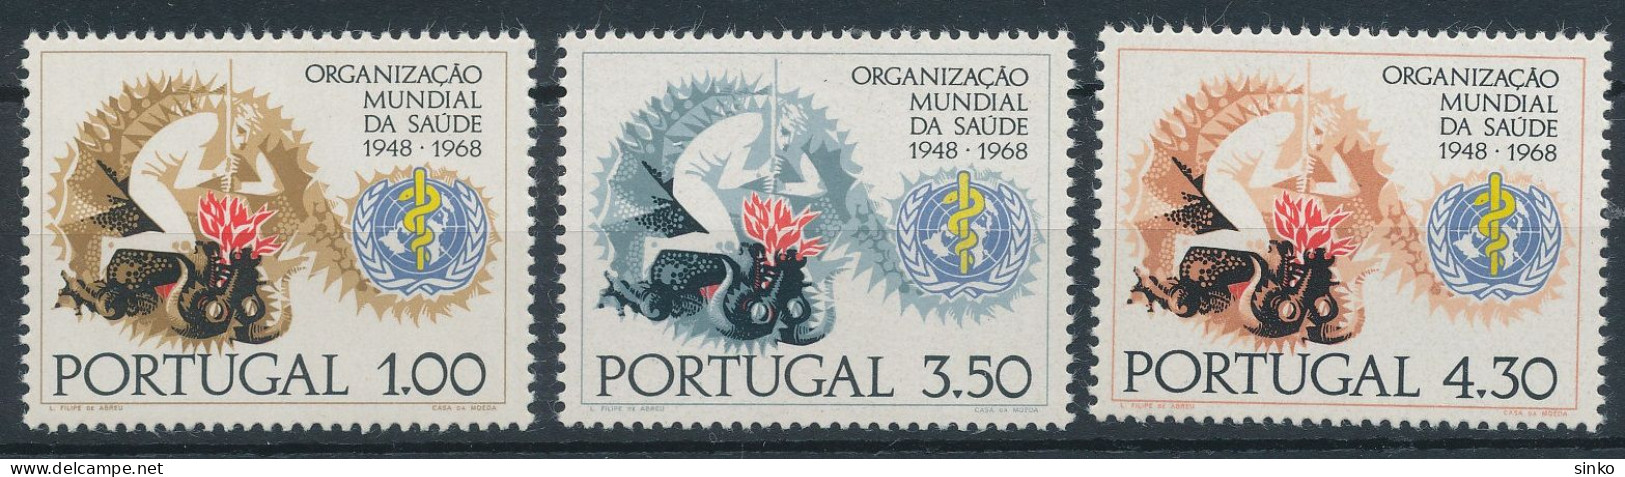 1968. Portugal - WHO - WGO